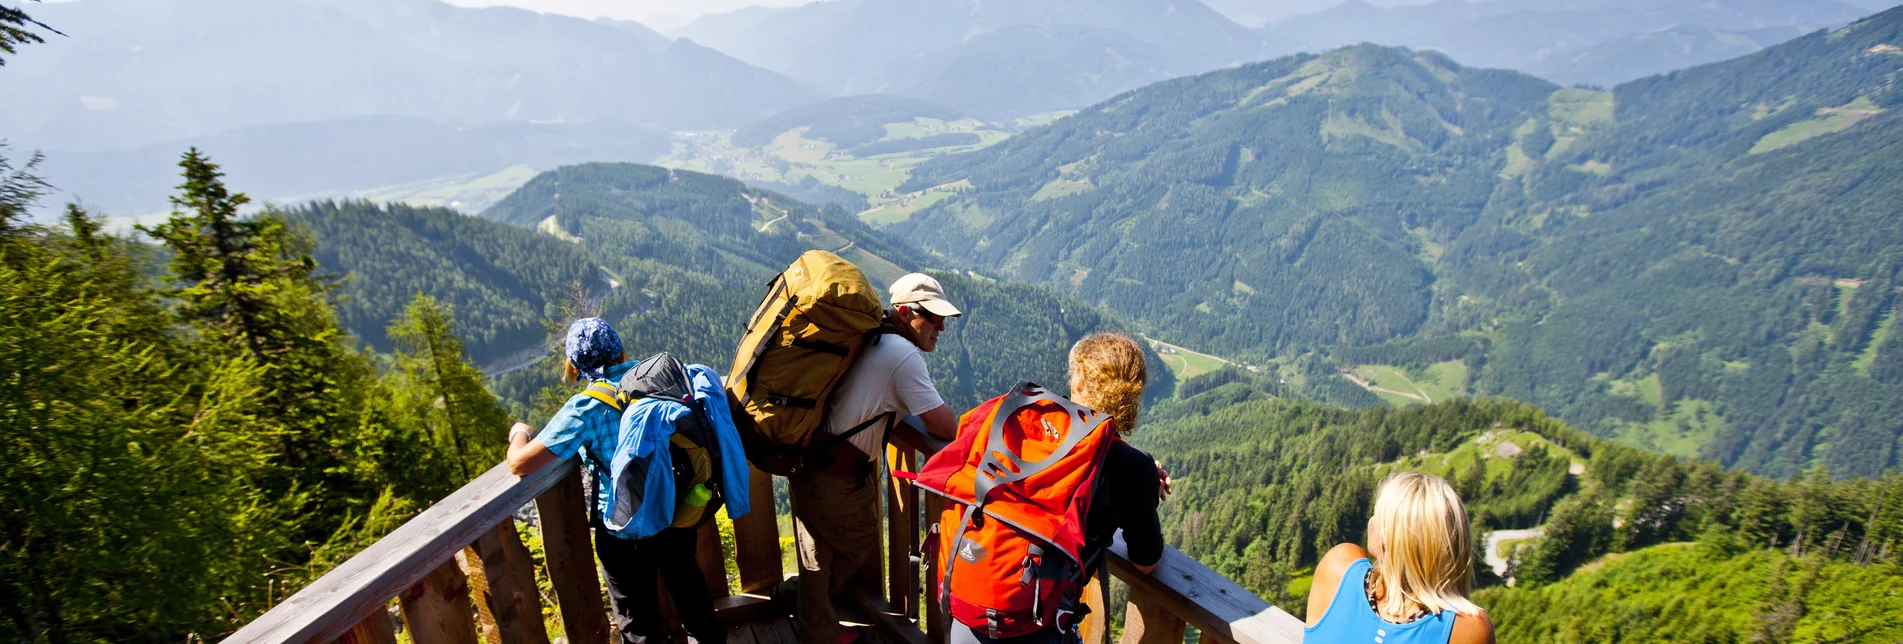 hiking | © Steiermark Tourismus | Tom Lamm